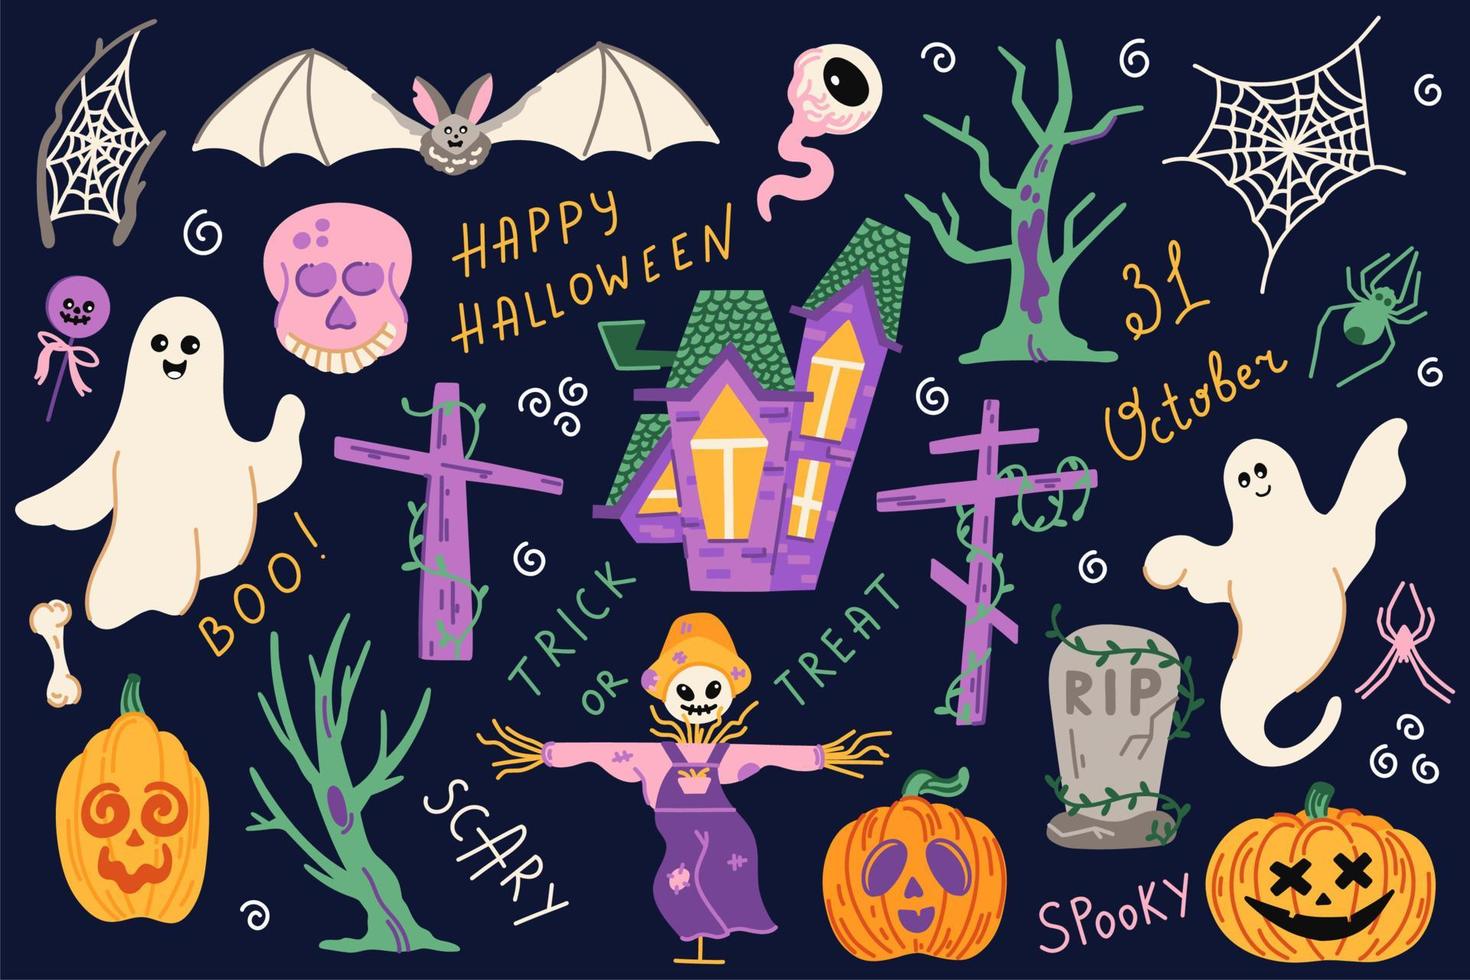 Cute Halloween illustrations set pumpkin, ghost, bat, scary trees and grave vector illustration set